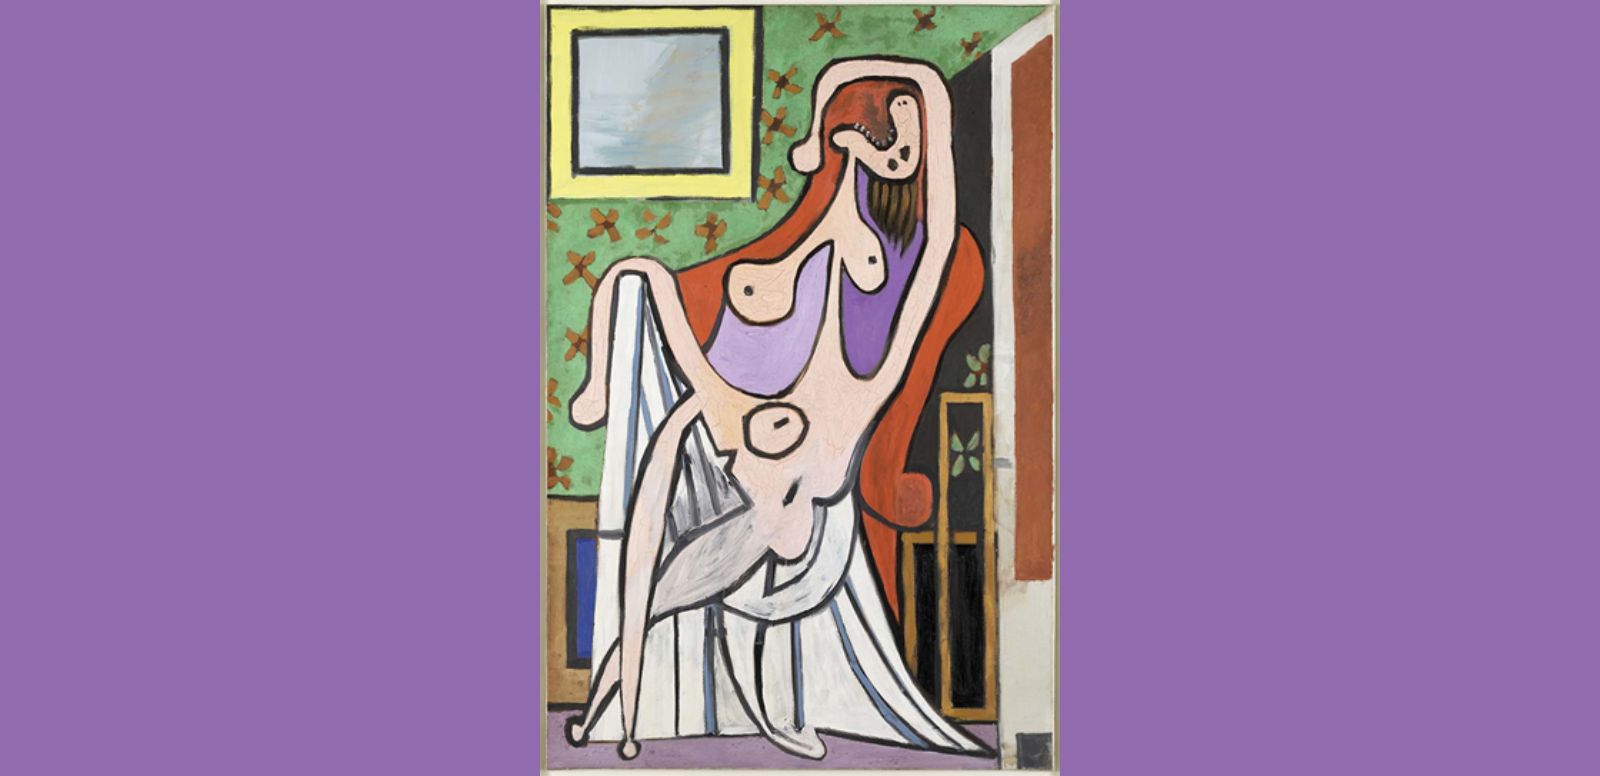 Pablo Picasso, “Gran desnudo en un sillón rojo”, 1929